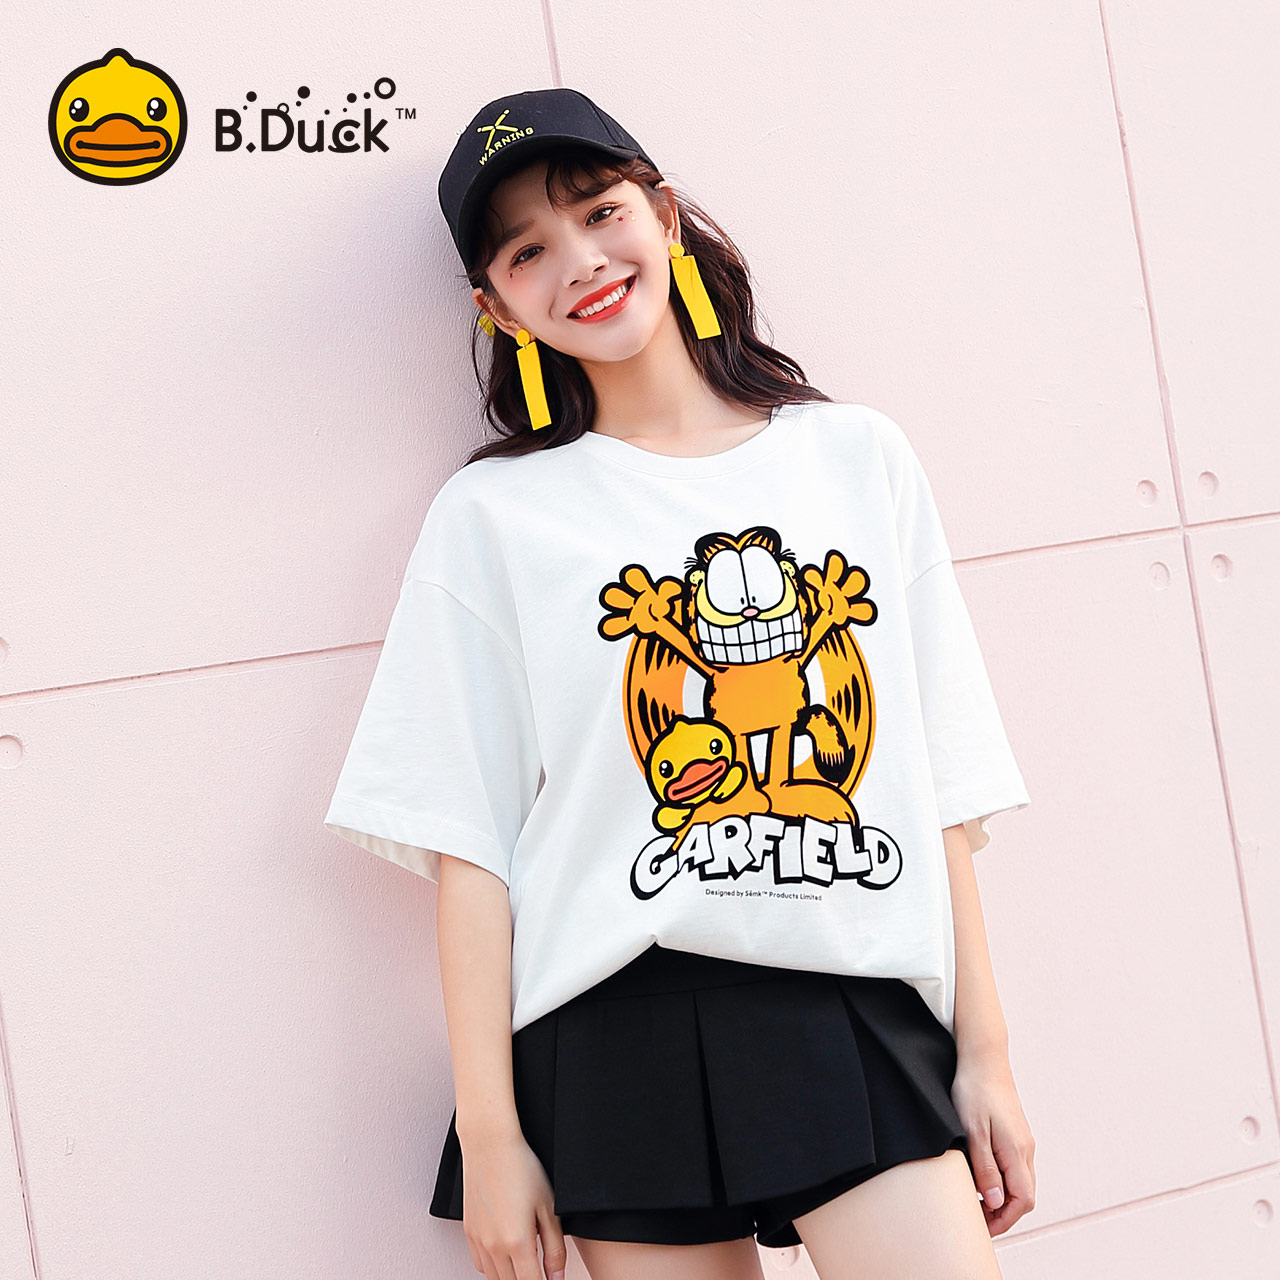 B.Duck小黄鸭 X Garfield加菲猫联名款卡通宽松韩版短袖T恤女上衣